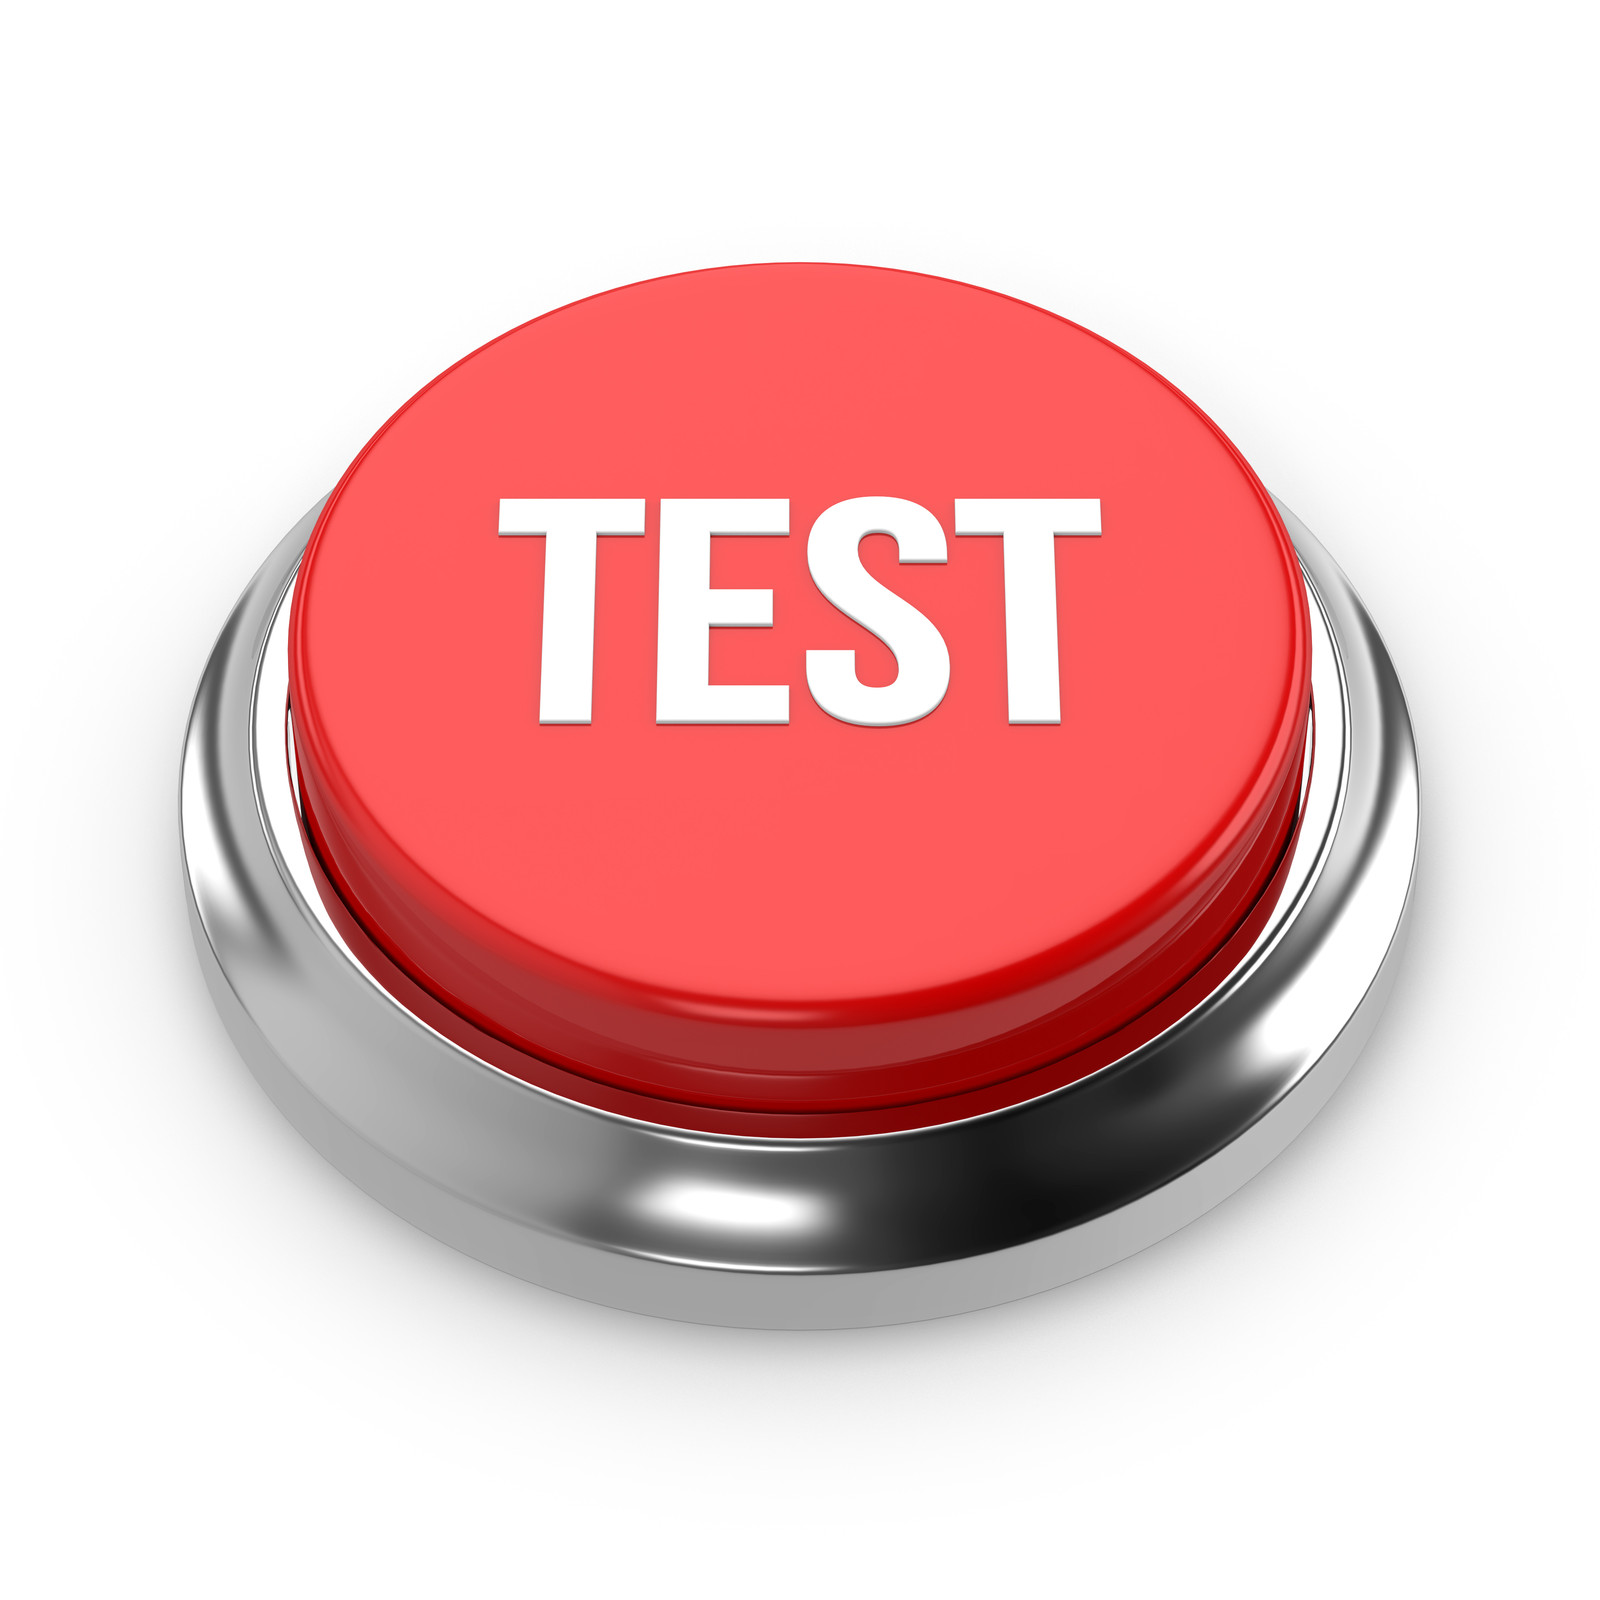 Test. Кнопка тест. Test надпись. Красная кнопка тест. Красная кнопка для тестирования.